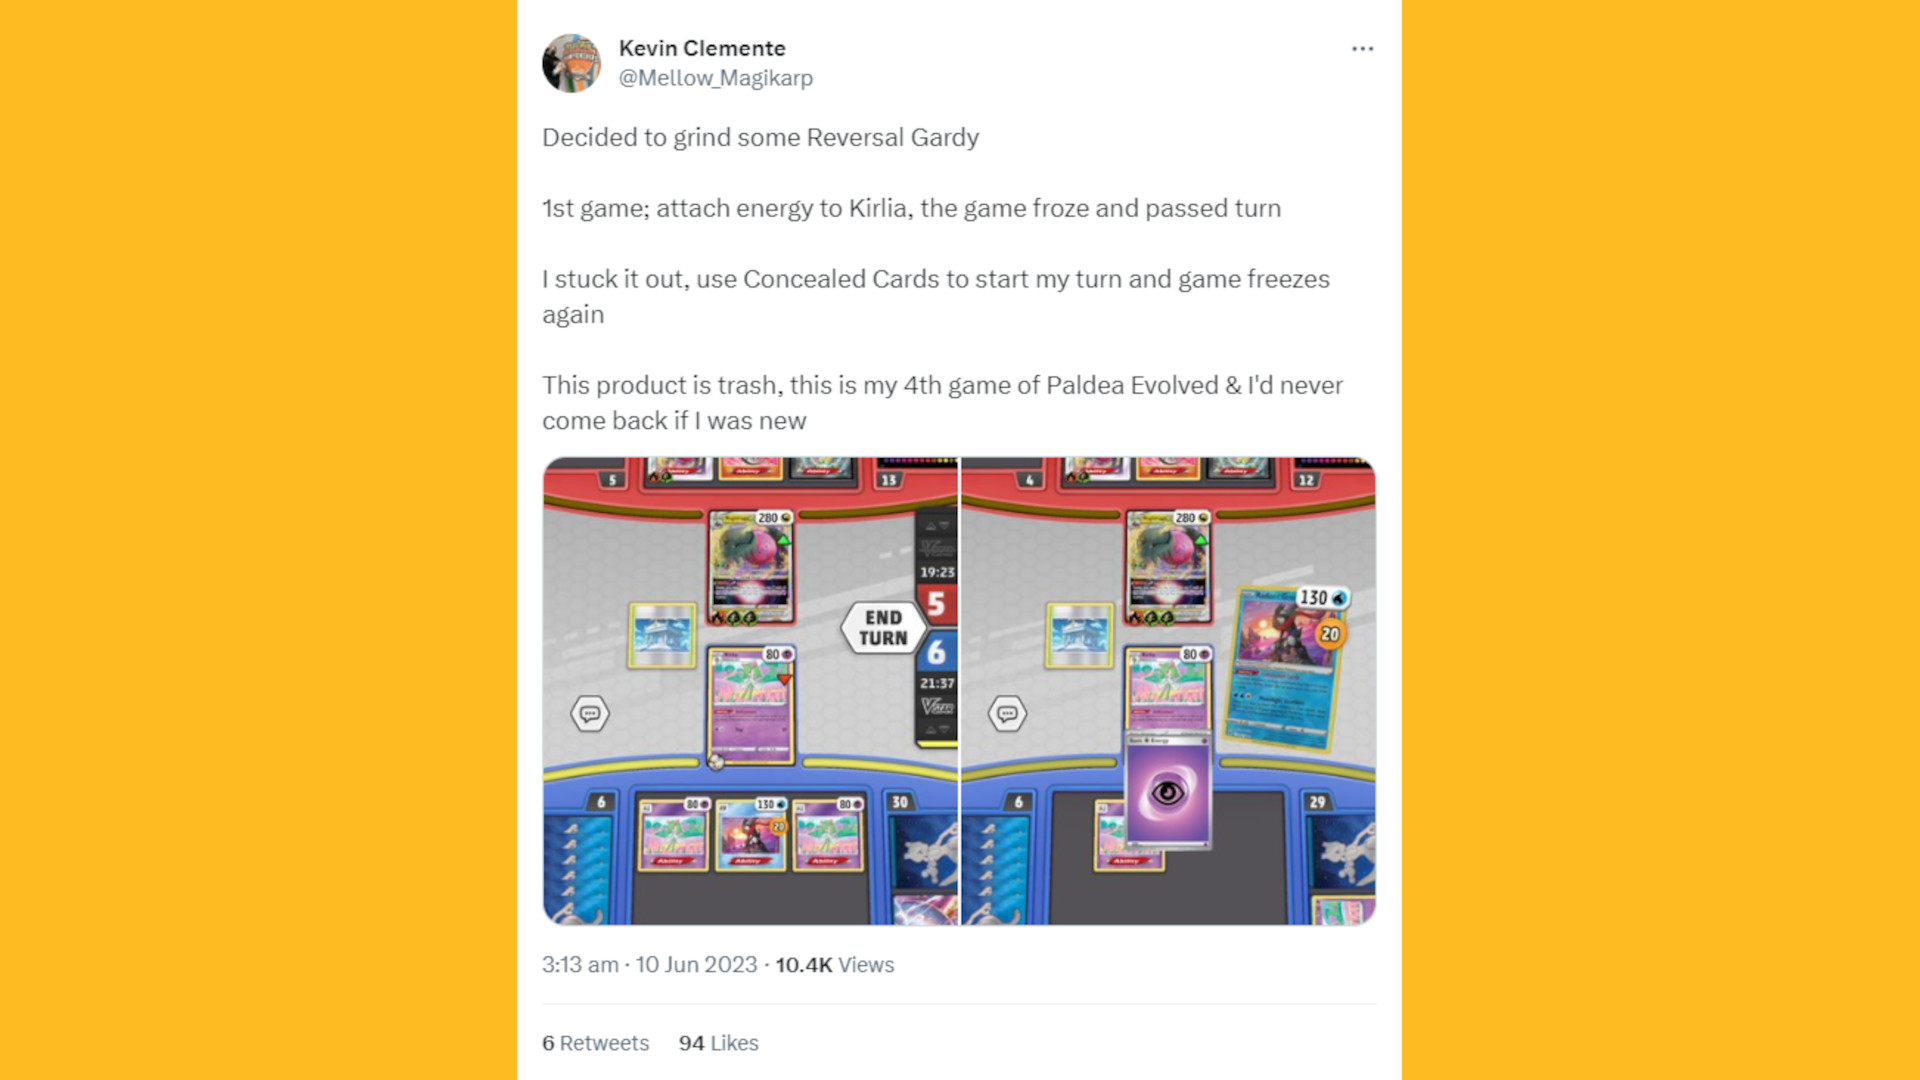 Pokémon TCG Live now available globally on Android and iOS